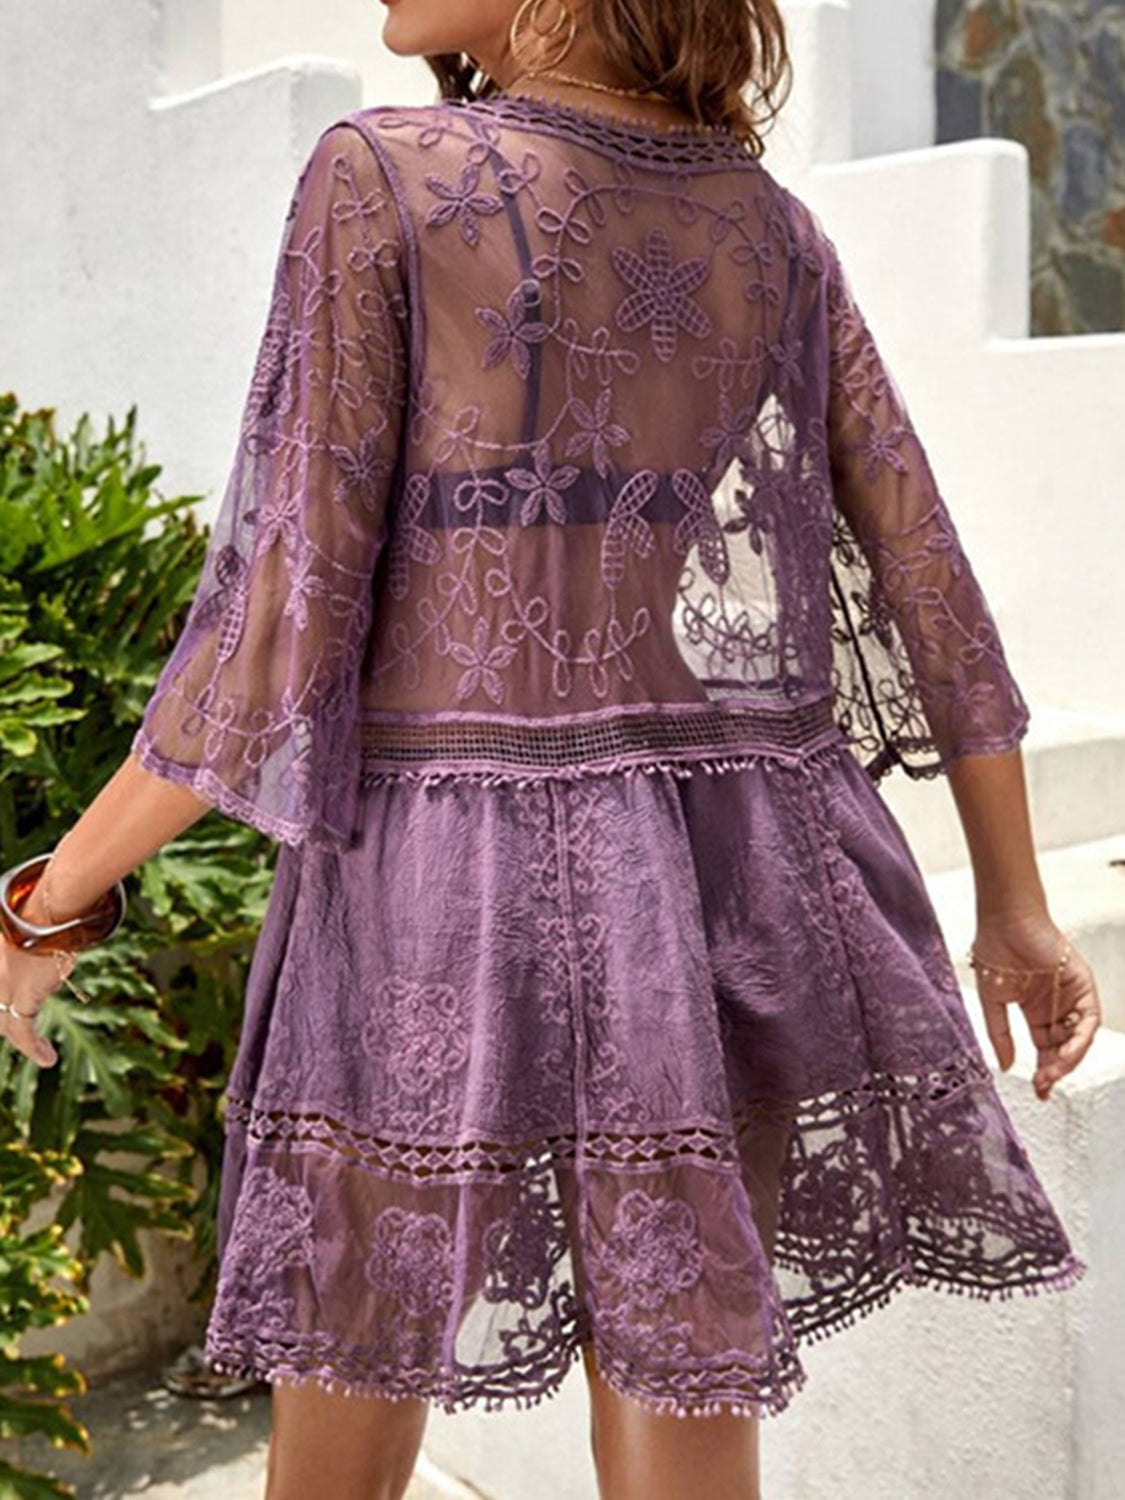 Lace Detail Plunge Cover-Up Dress - 6 Colors